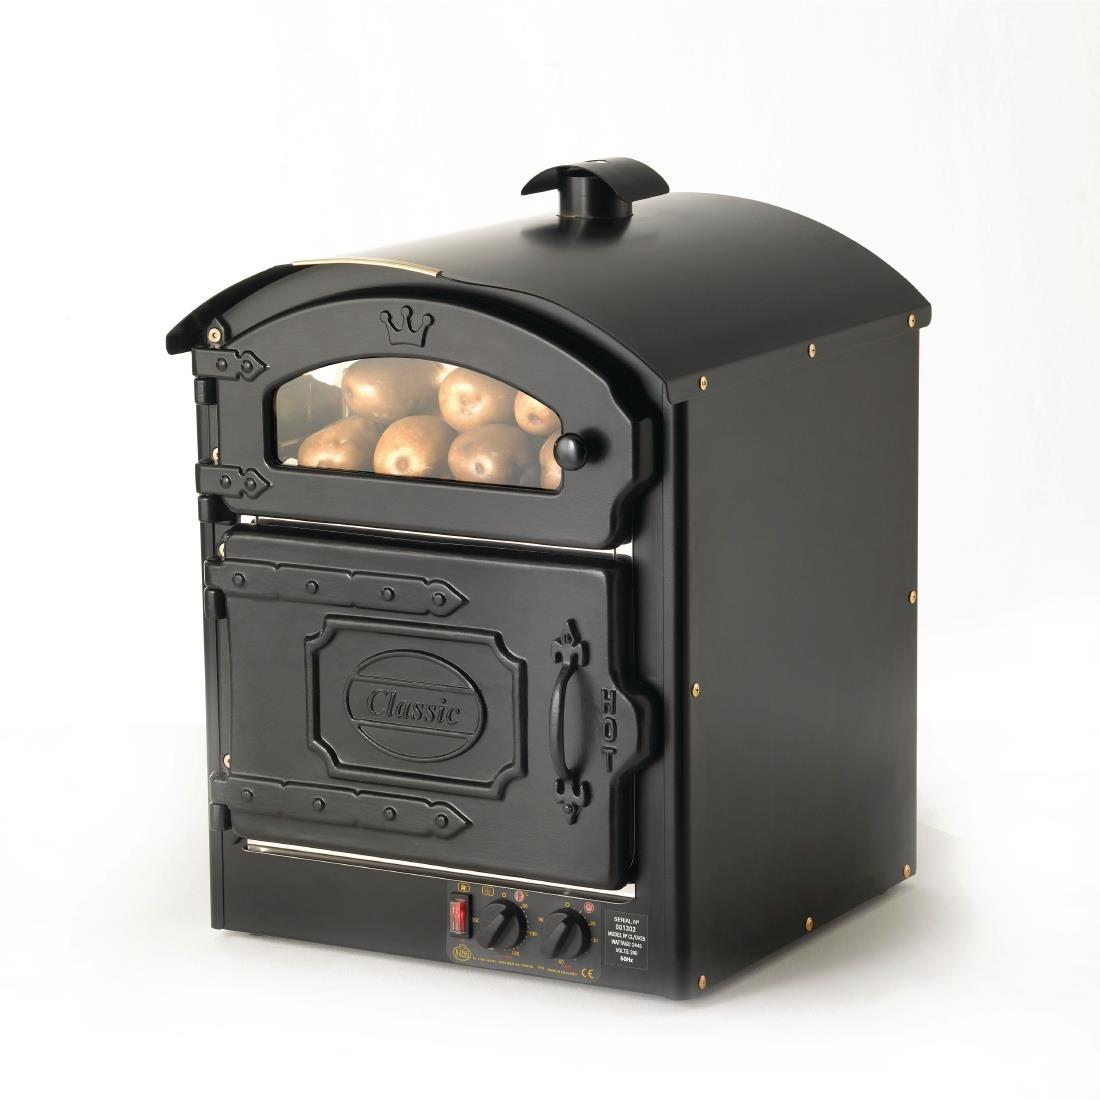 King Edward Classic 25 Potato Oven Black CLASS25/BLK - GP262  - 3